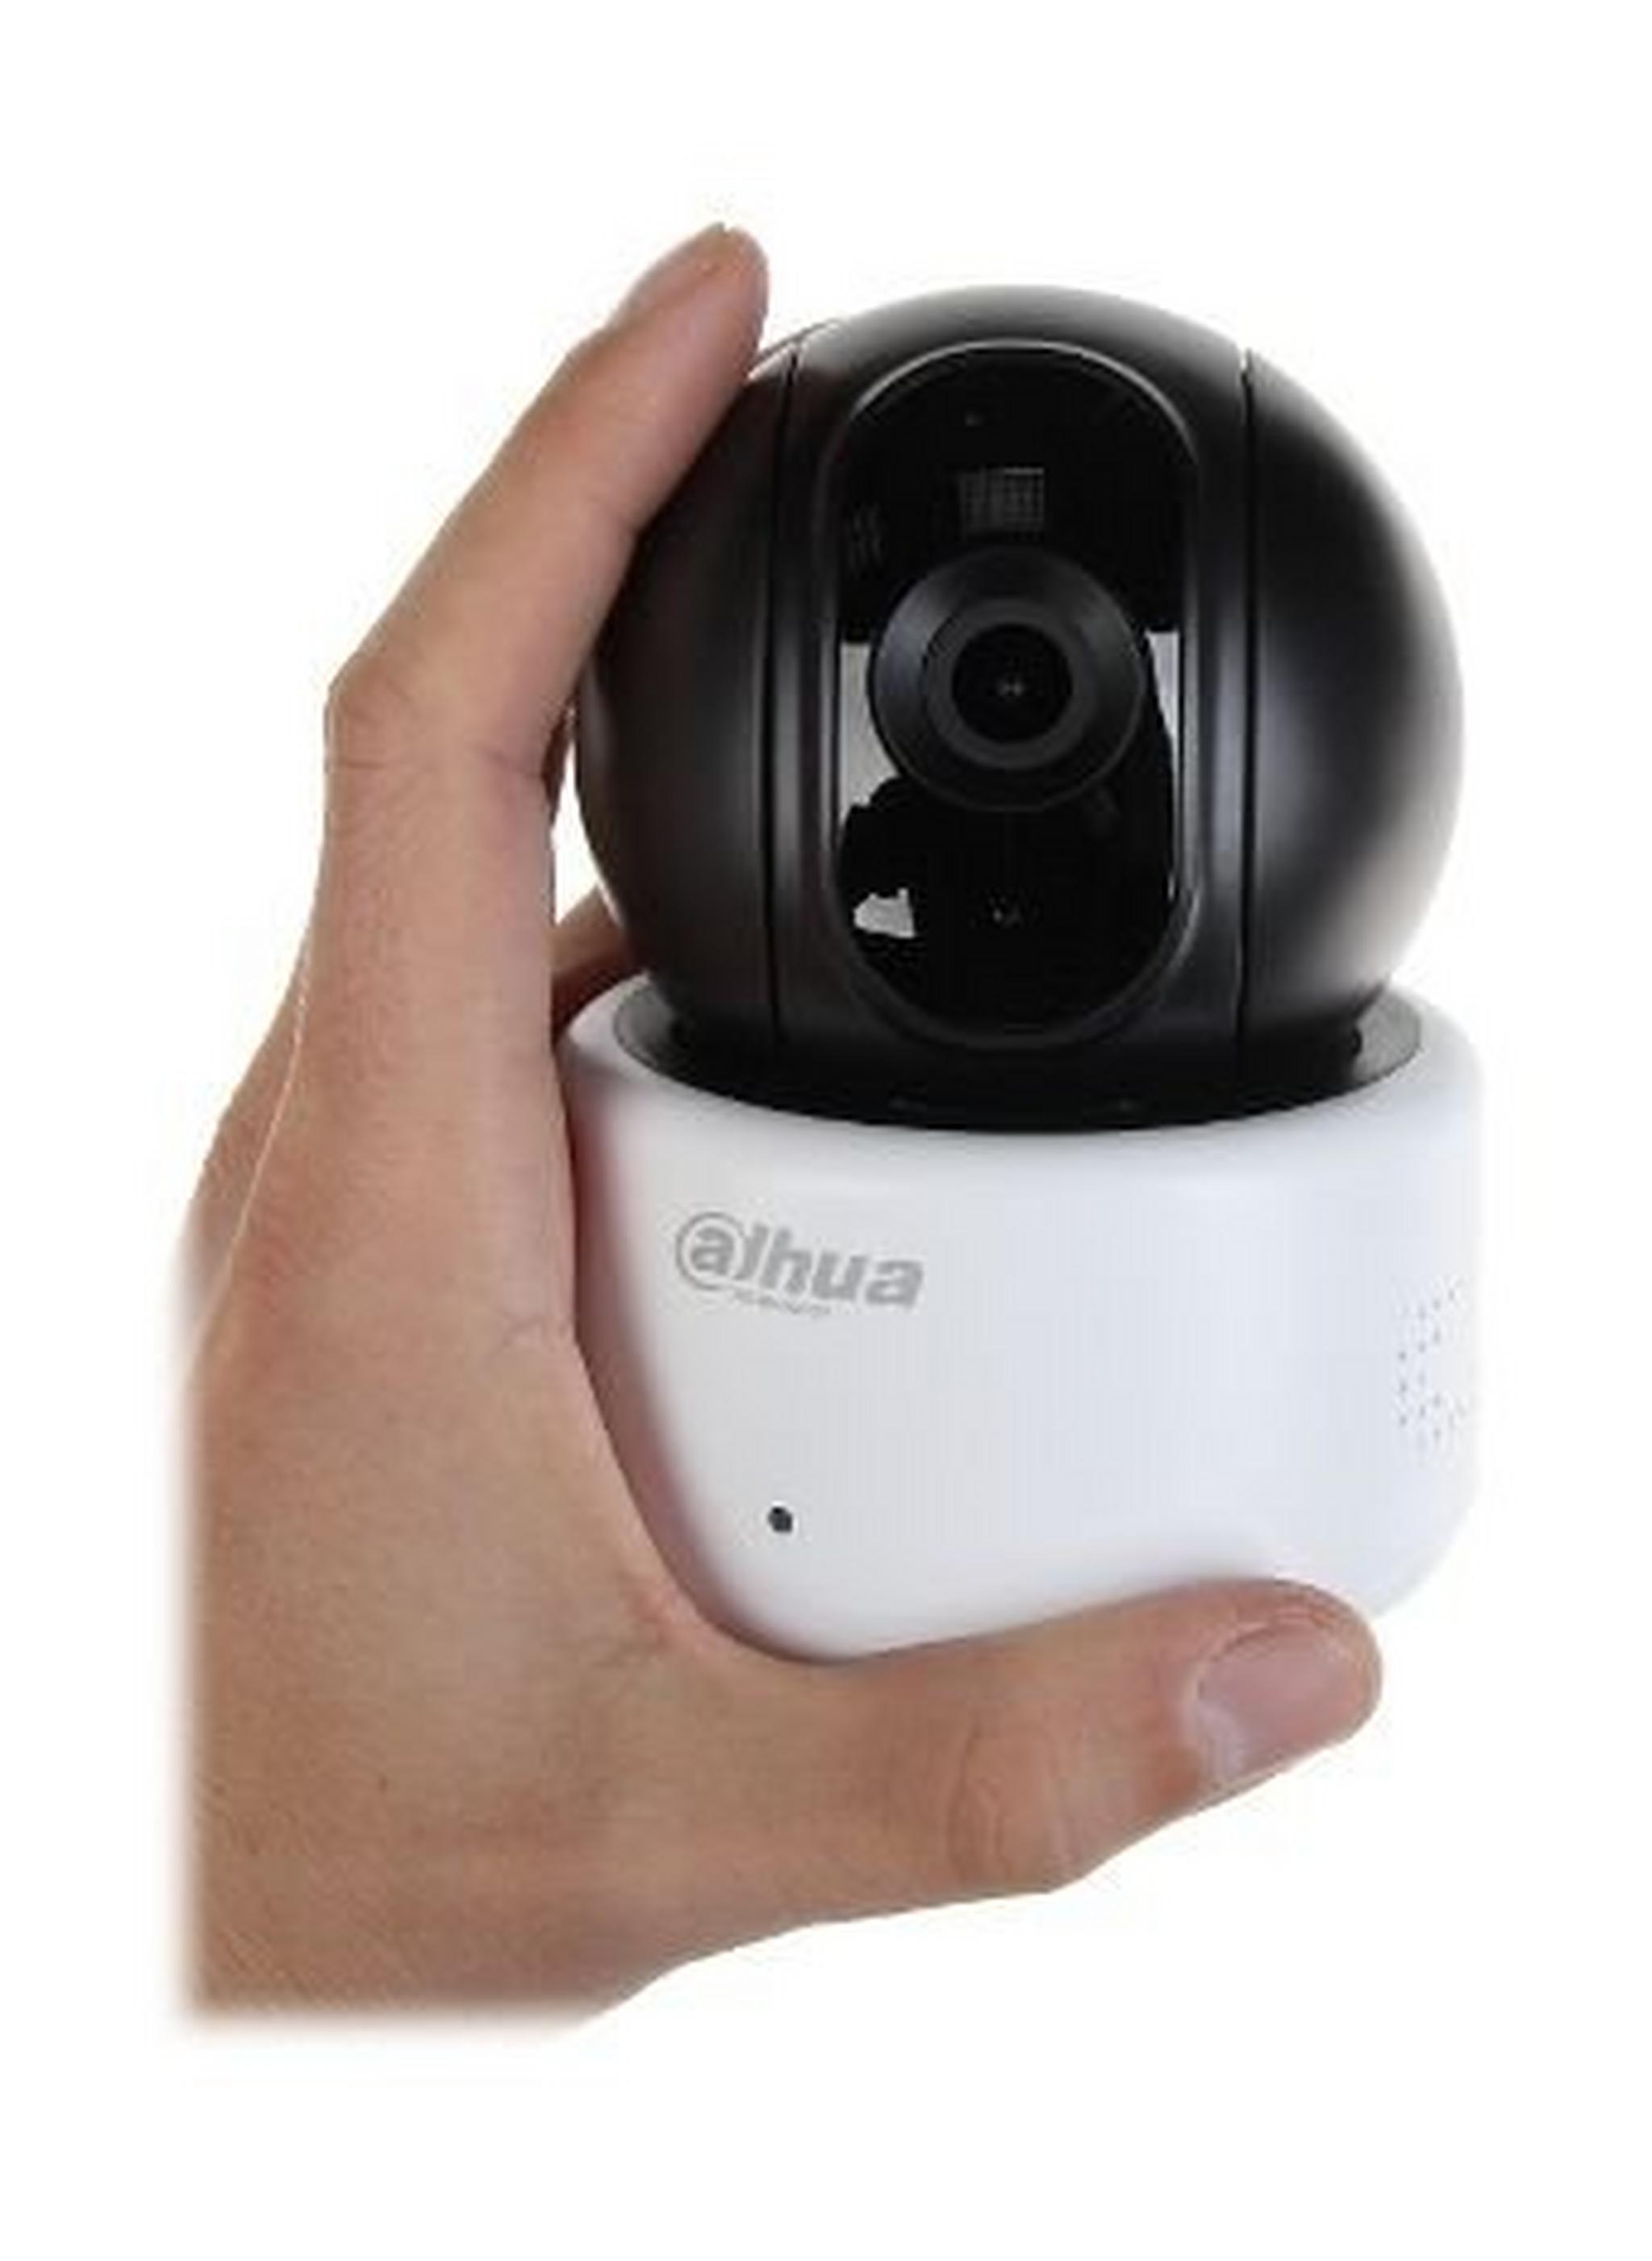 Dahua 1080P Wi-Fi PT Security Camera (DH-IPC-A22P) - White